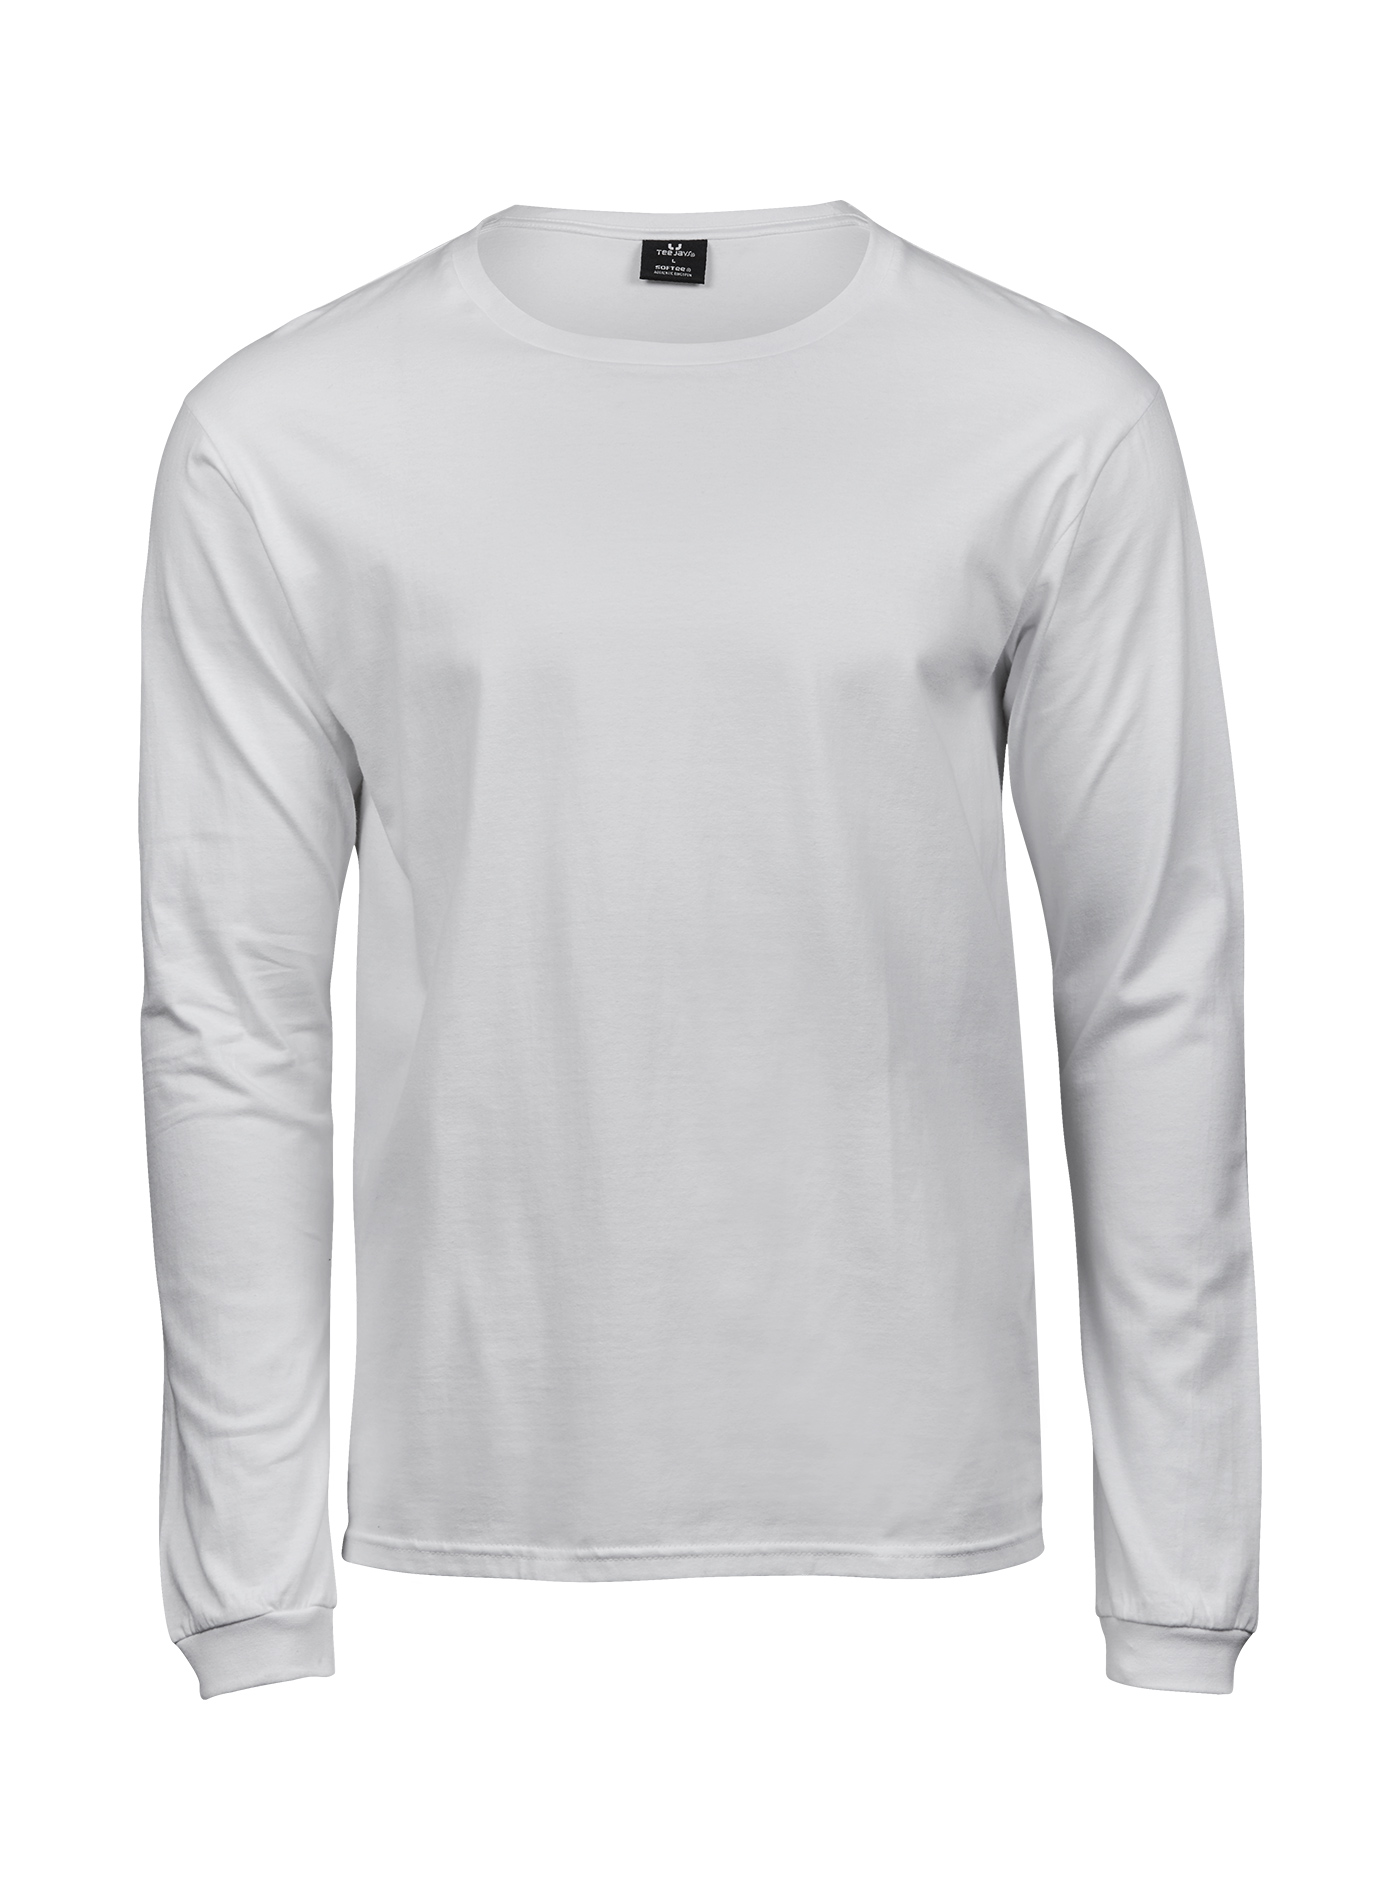 Pánské tričko s dlouhým rukávem Sof-Tee Jays - Bílá 3XL